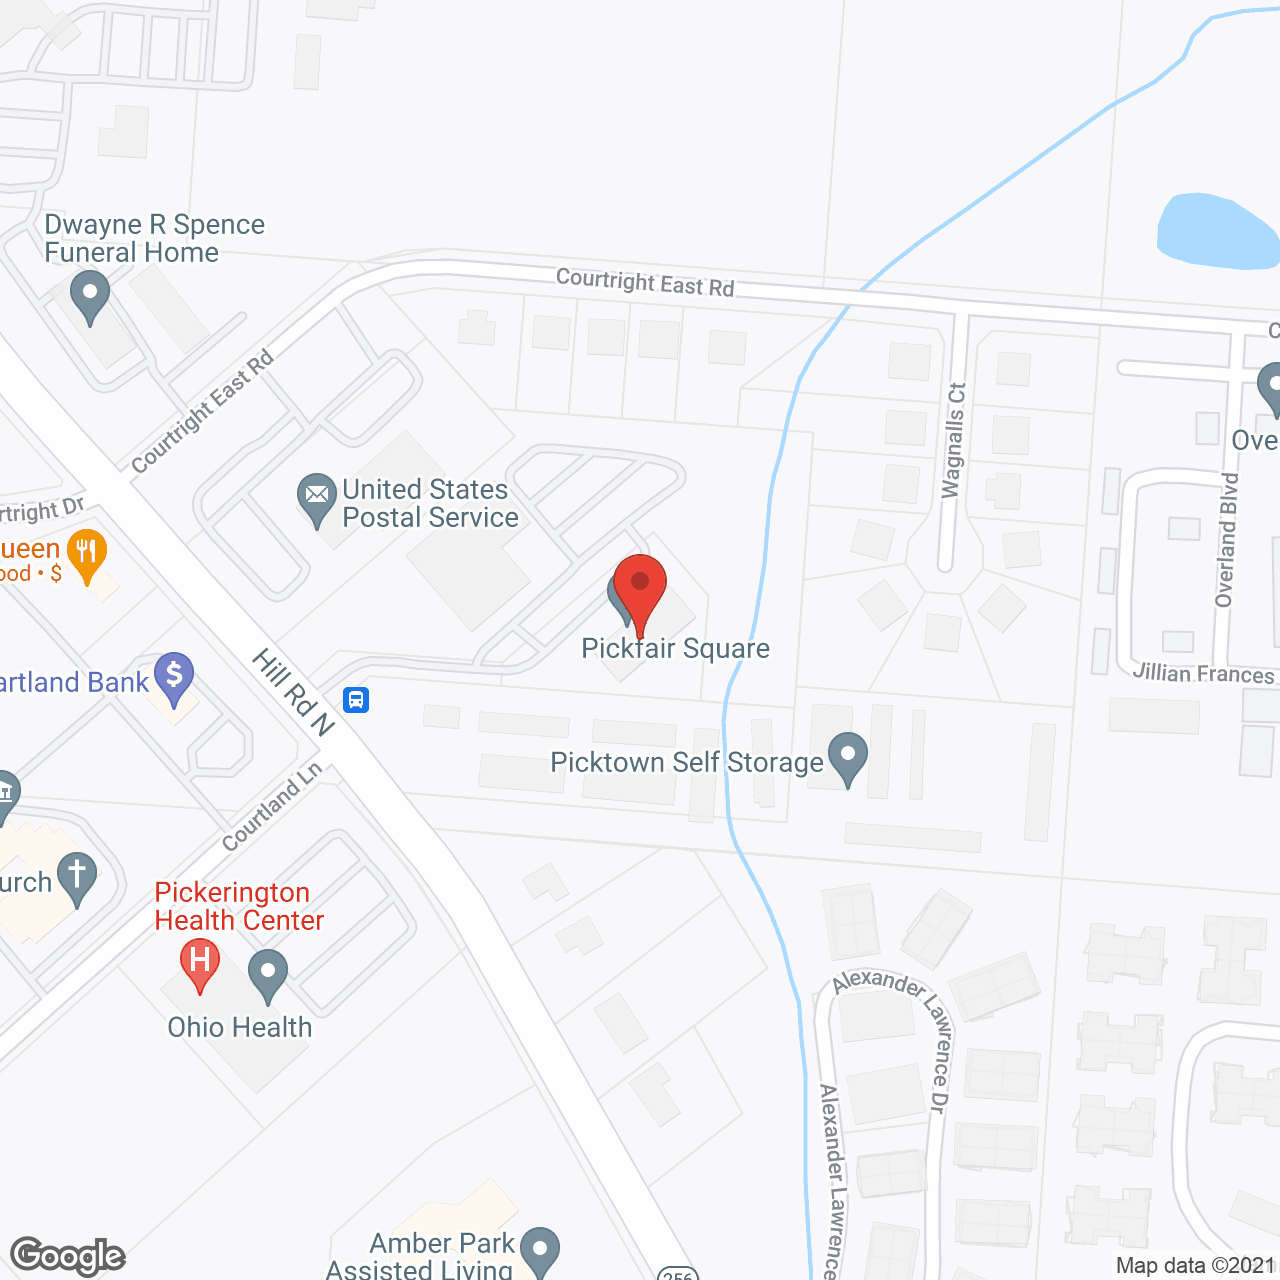 Pickfair Square in google map